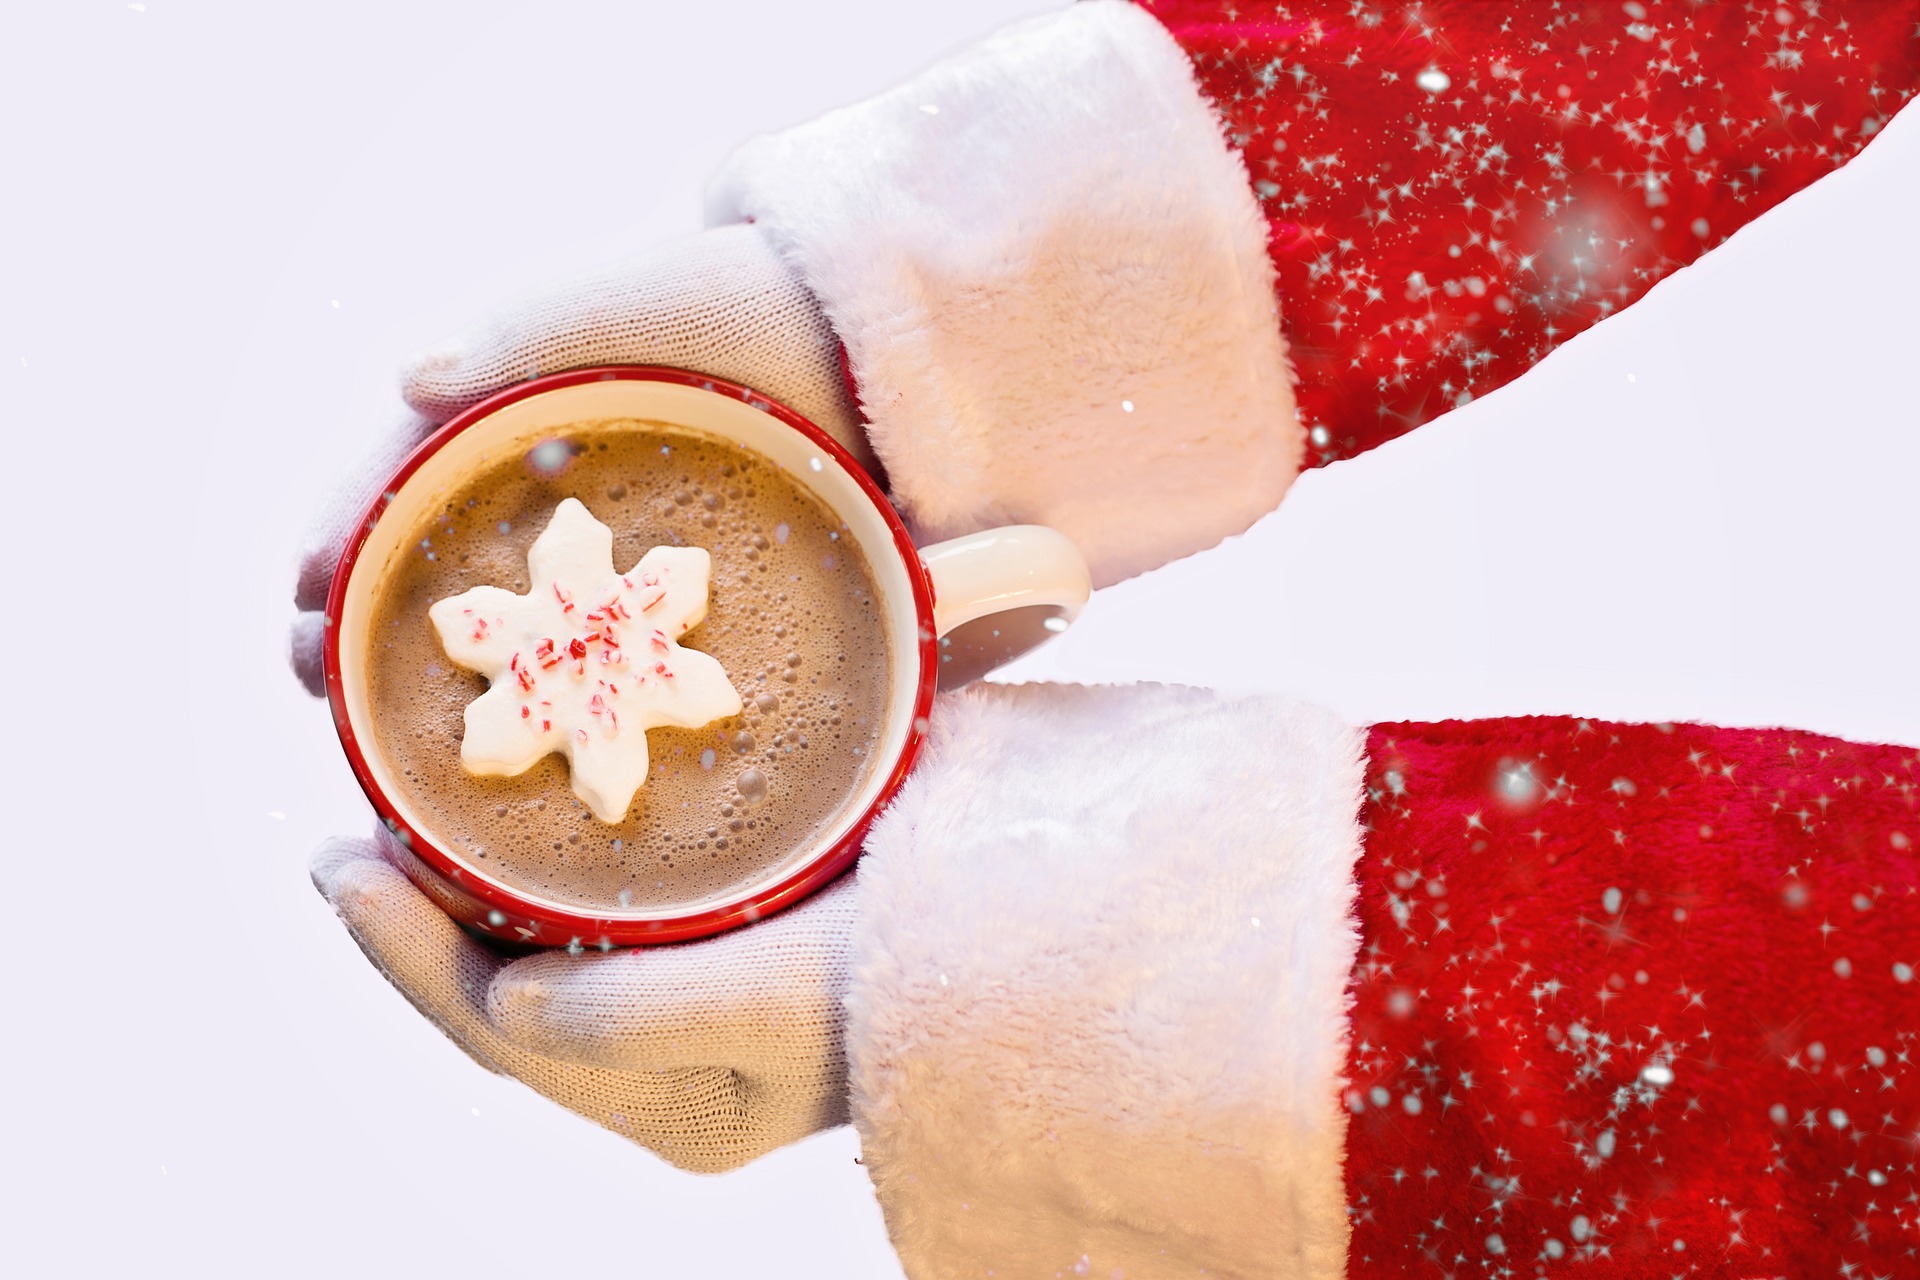 Santa holding a mug of hot chocolate with a snowflake shaped marshmallow.